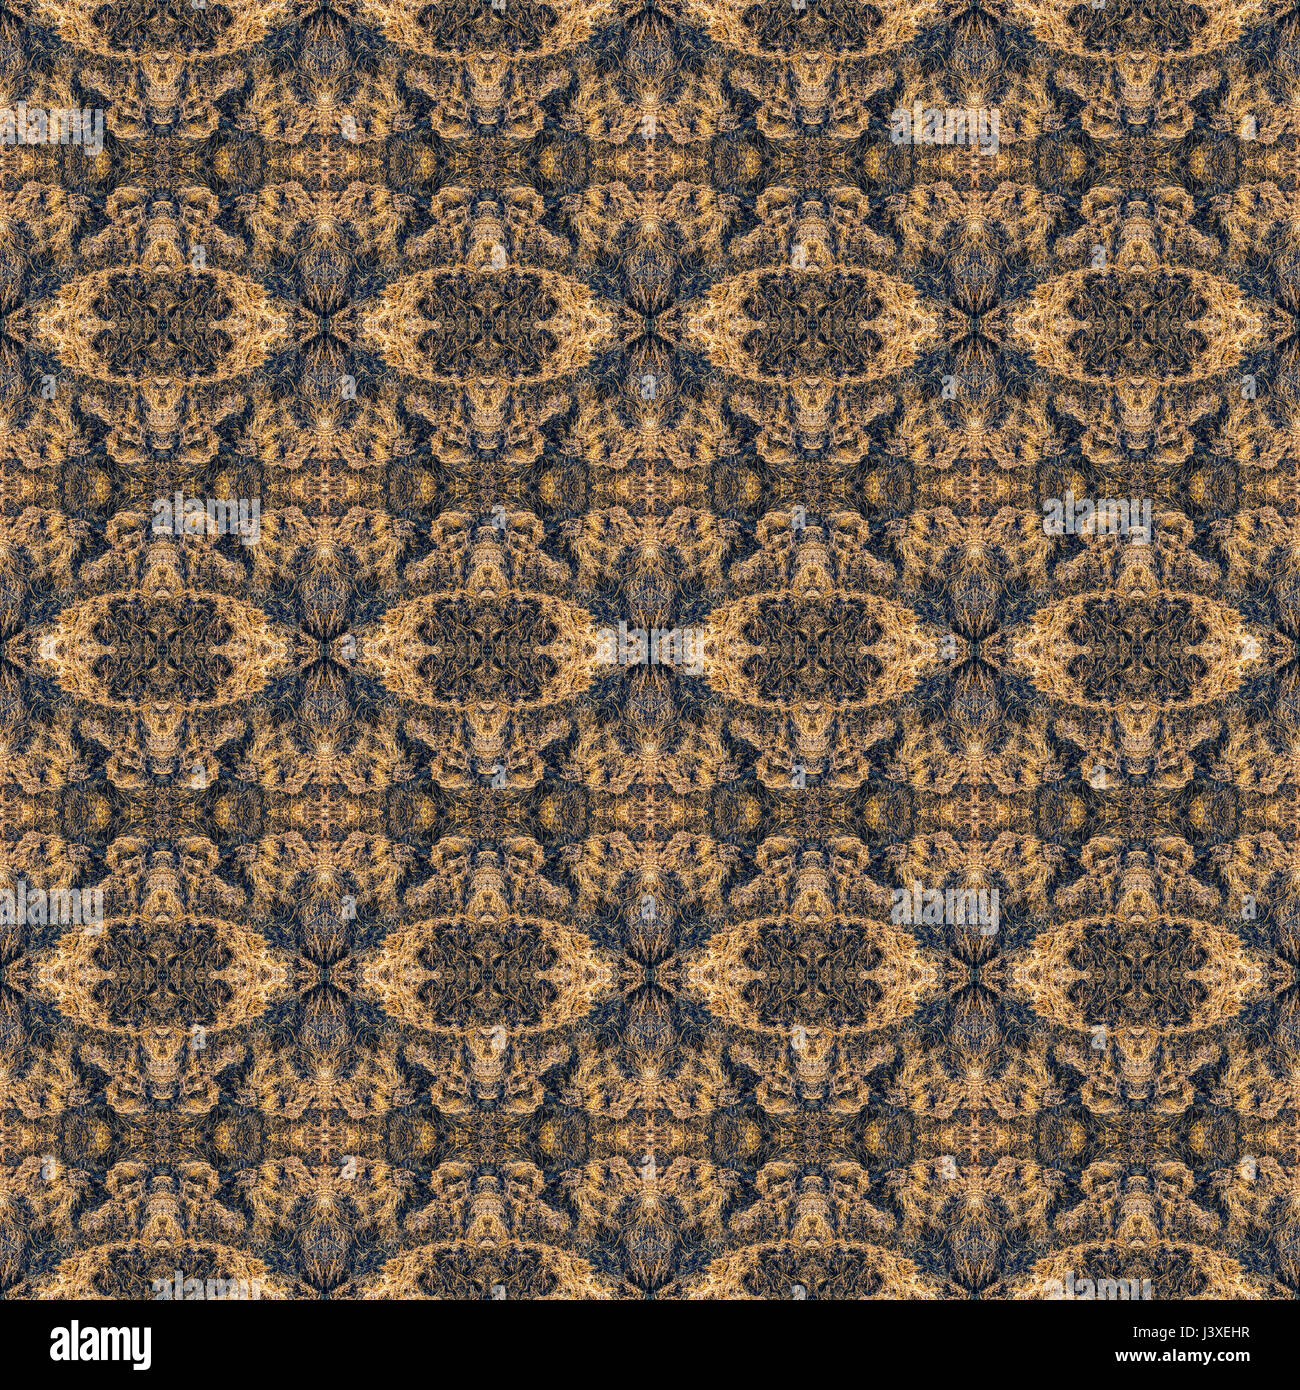 Natural fiber carpet wallpaper, seamless pattern or background Stock Photo